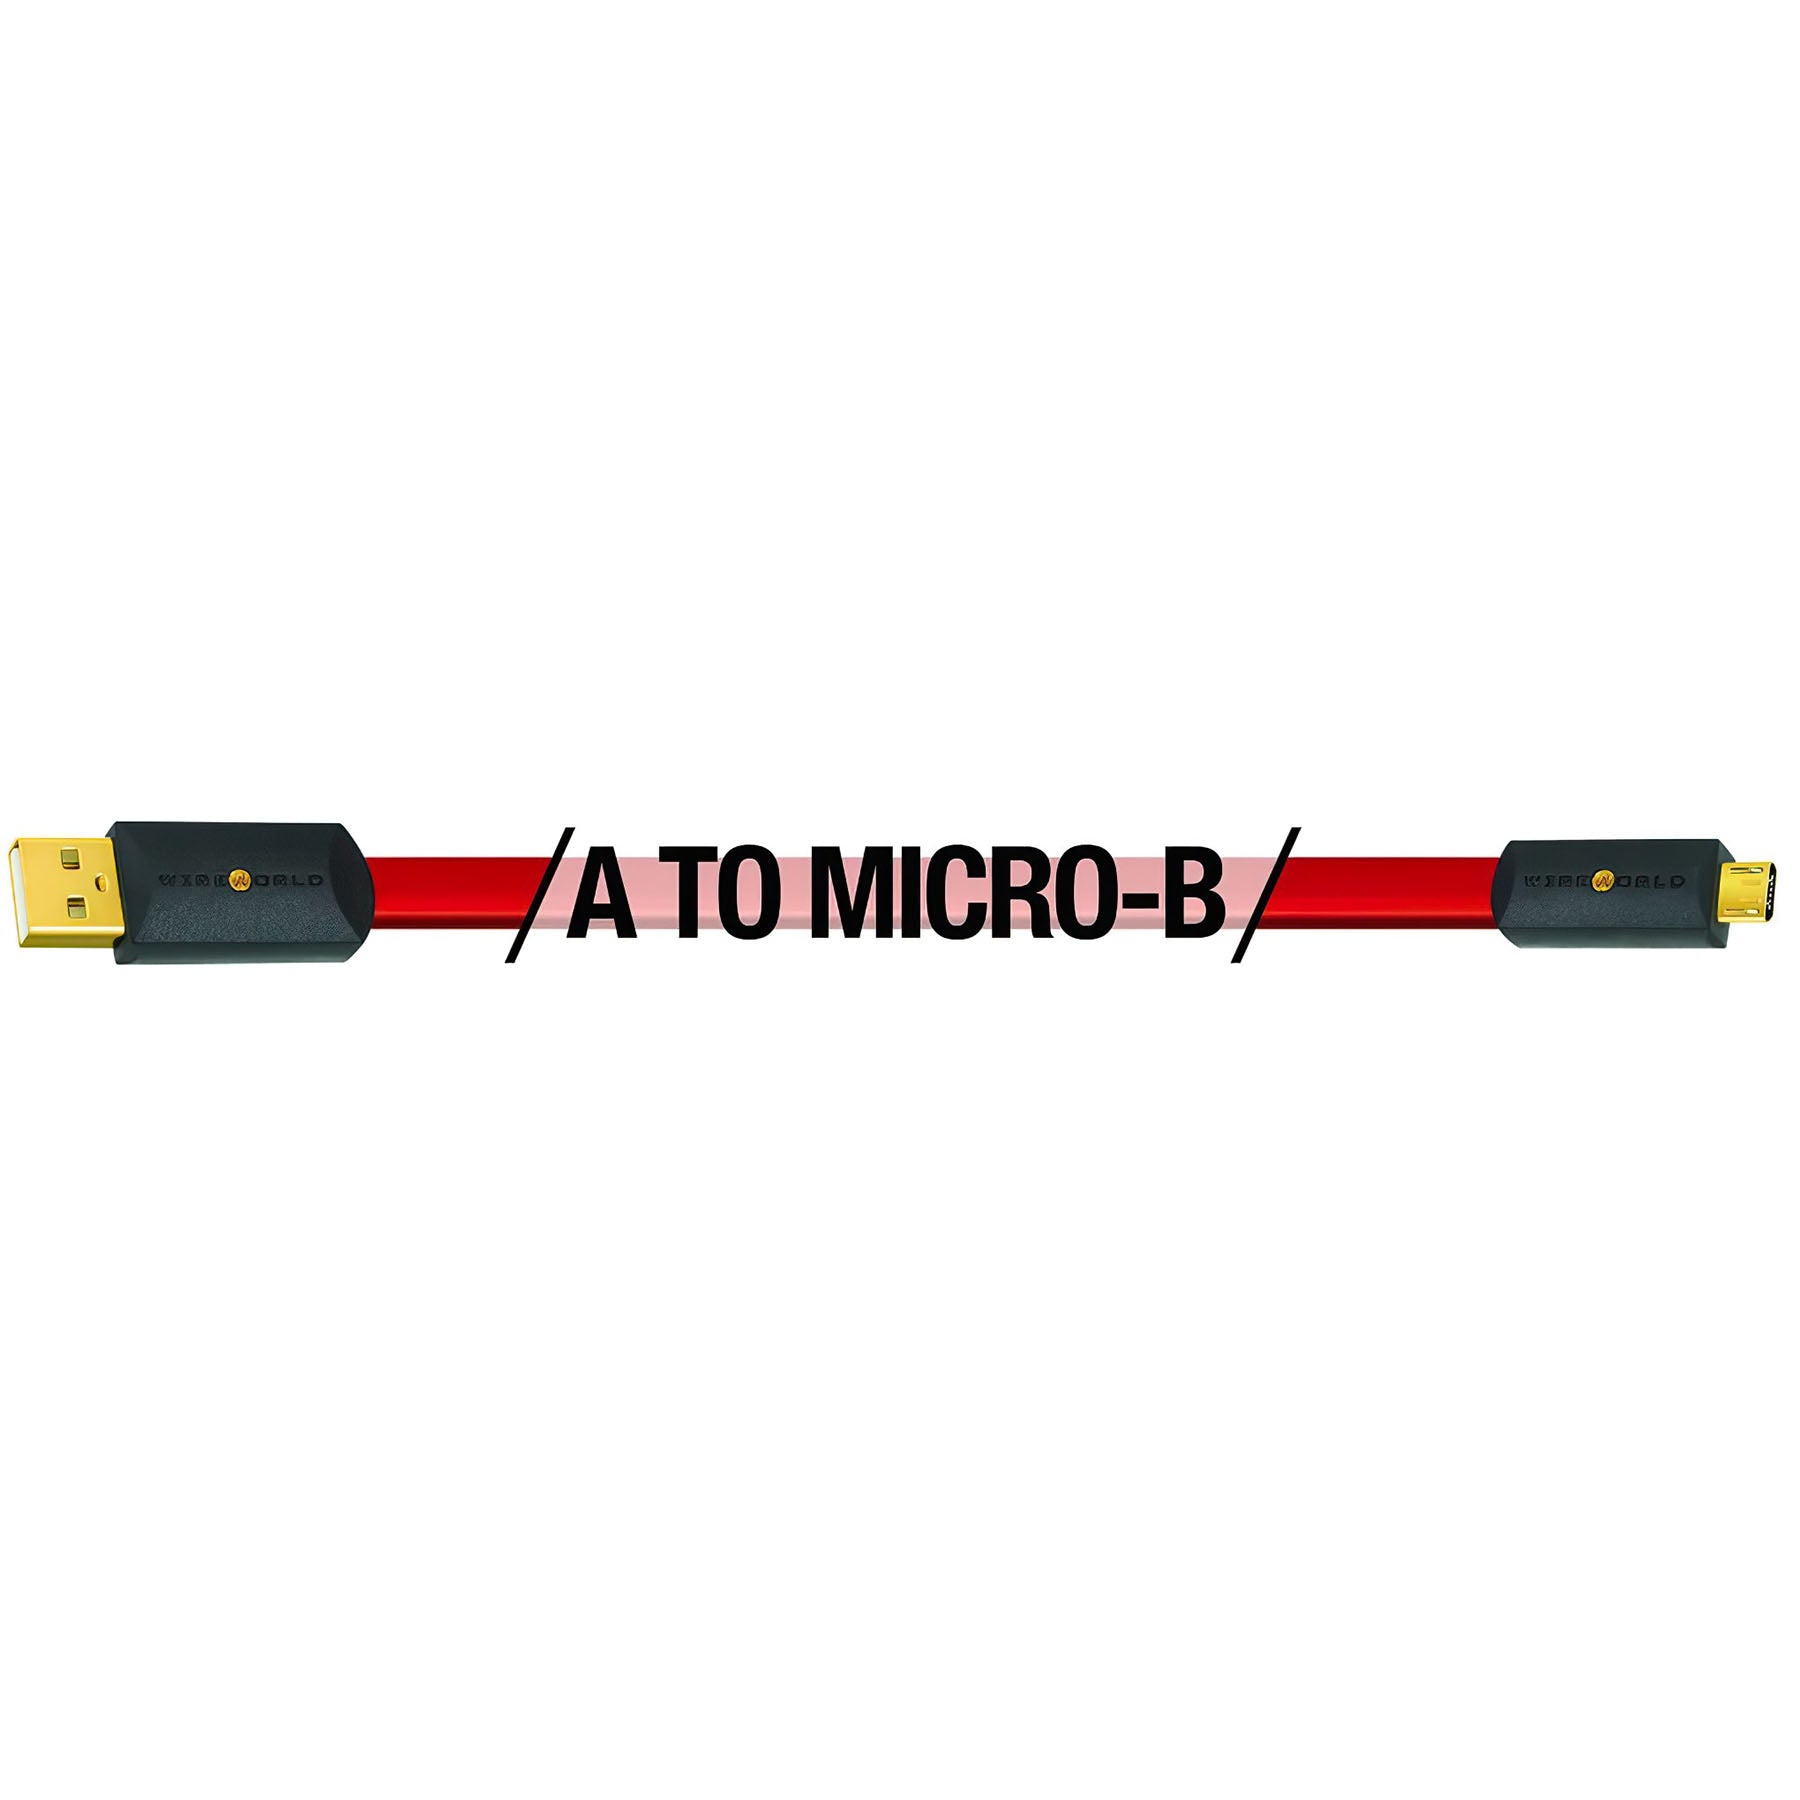 Wireworld Starlight 8 USB 2.0 Audio Cables